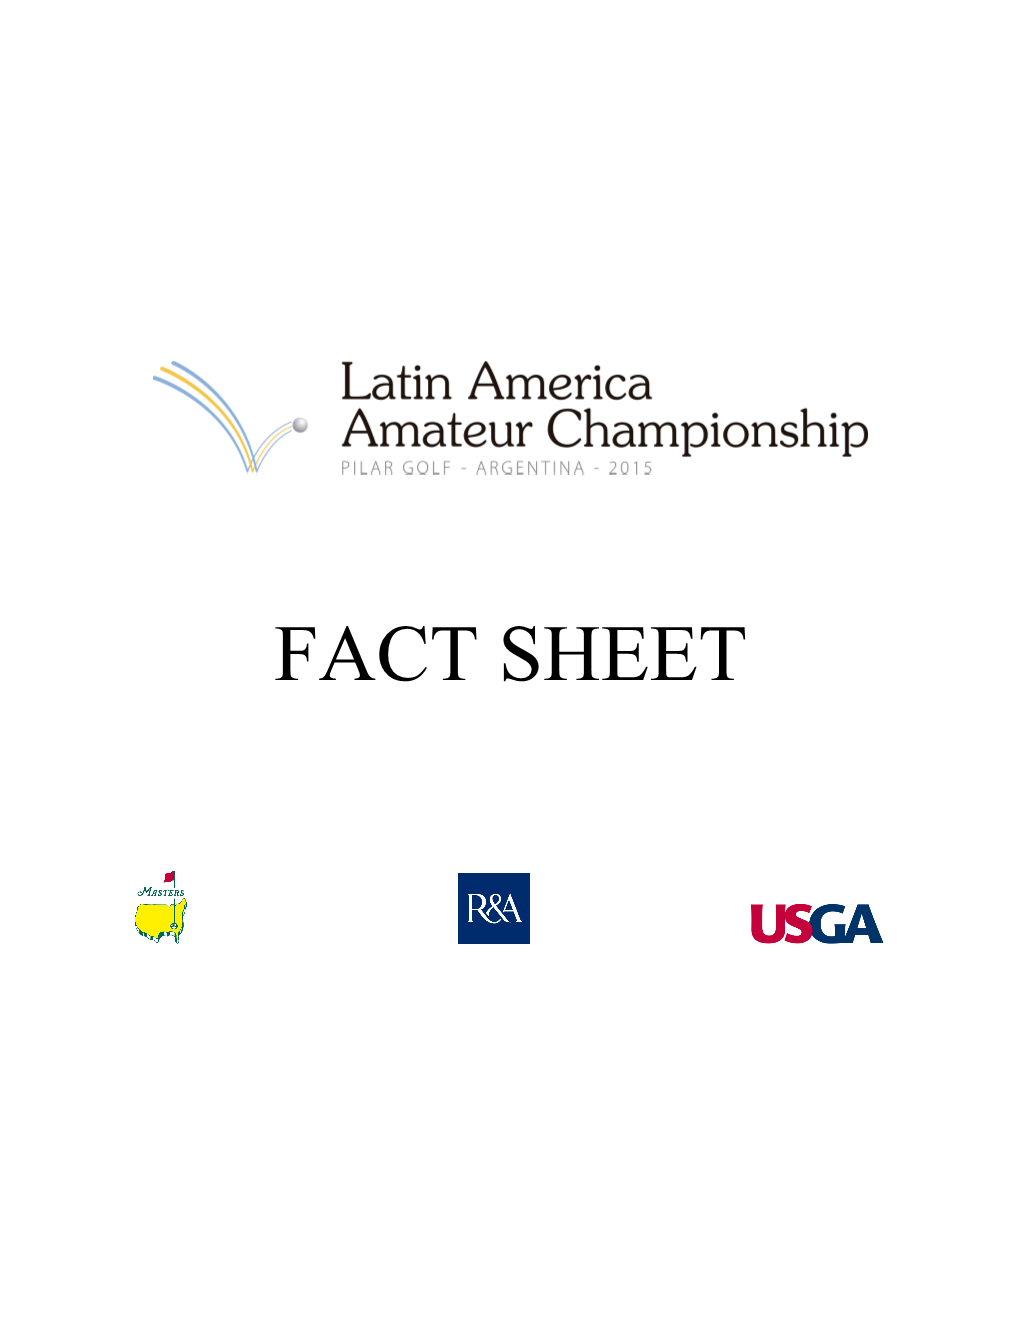 Latin America Amateur Championship 2015